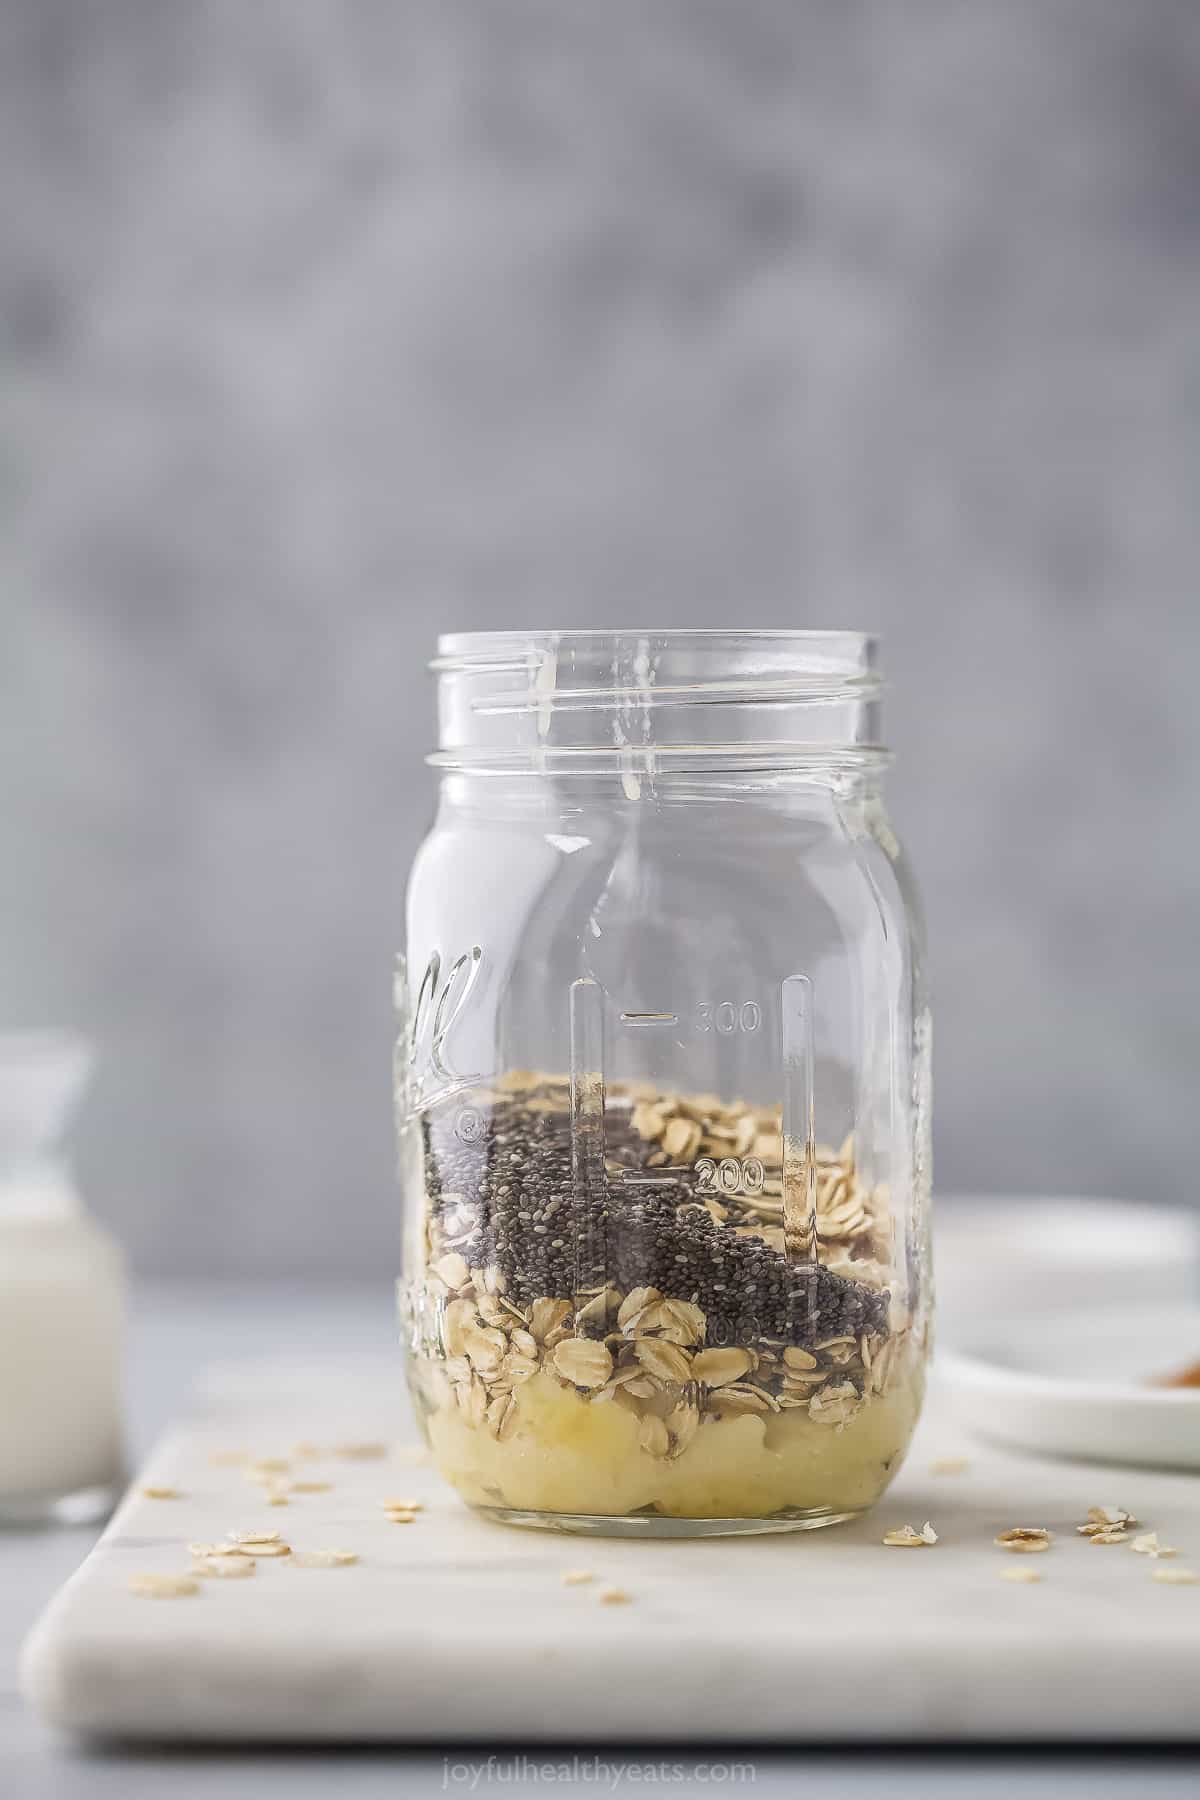 Mashed banana, oats, and chia seeds in a mason jar